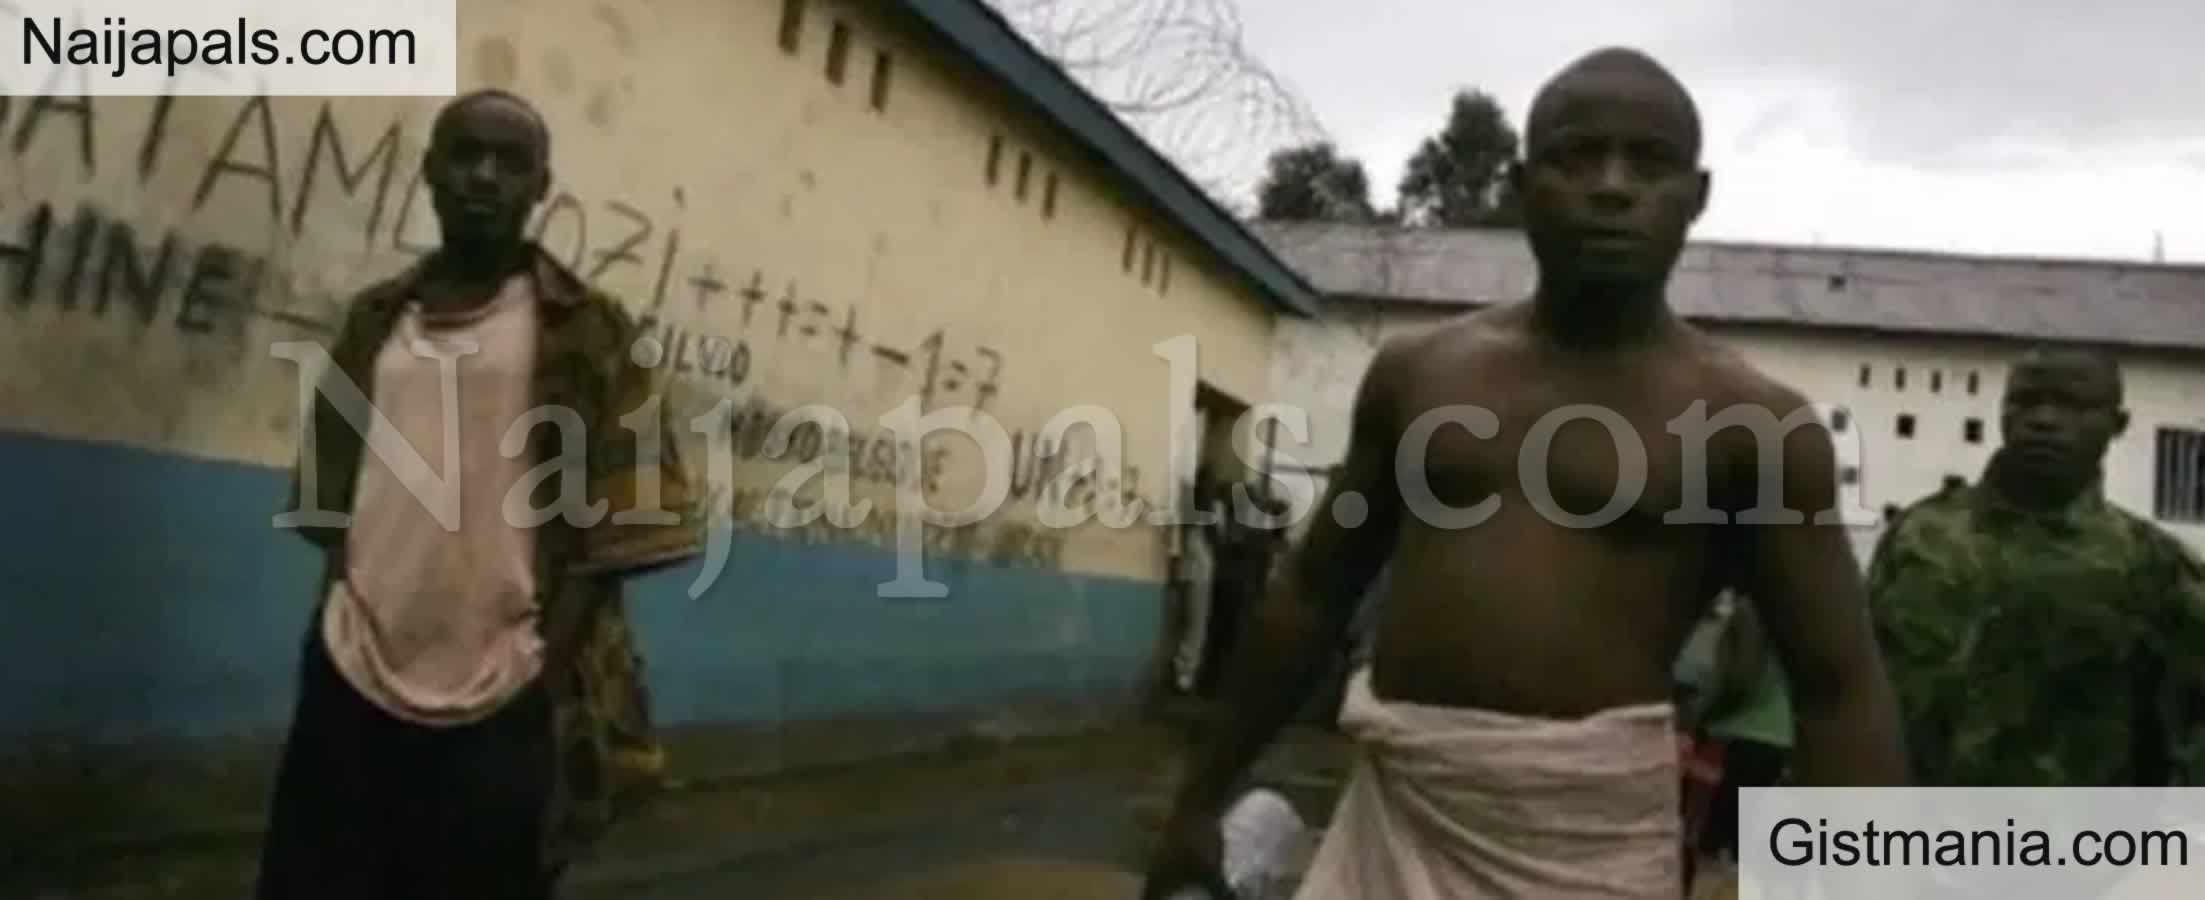 Naked prison break: 3 inmates dead, 7 recaptured | Nation